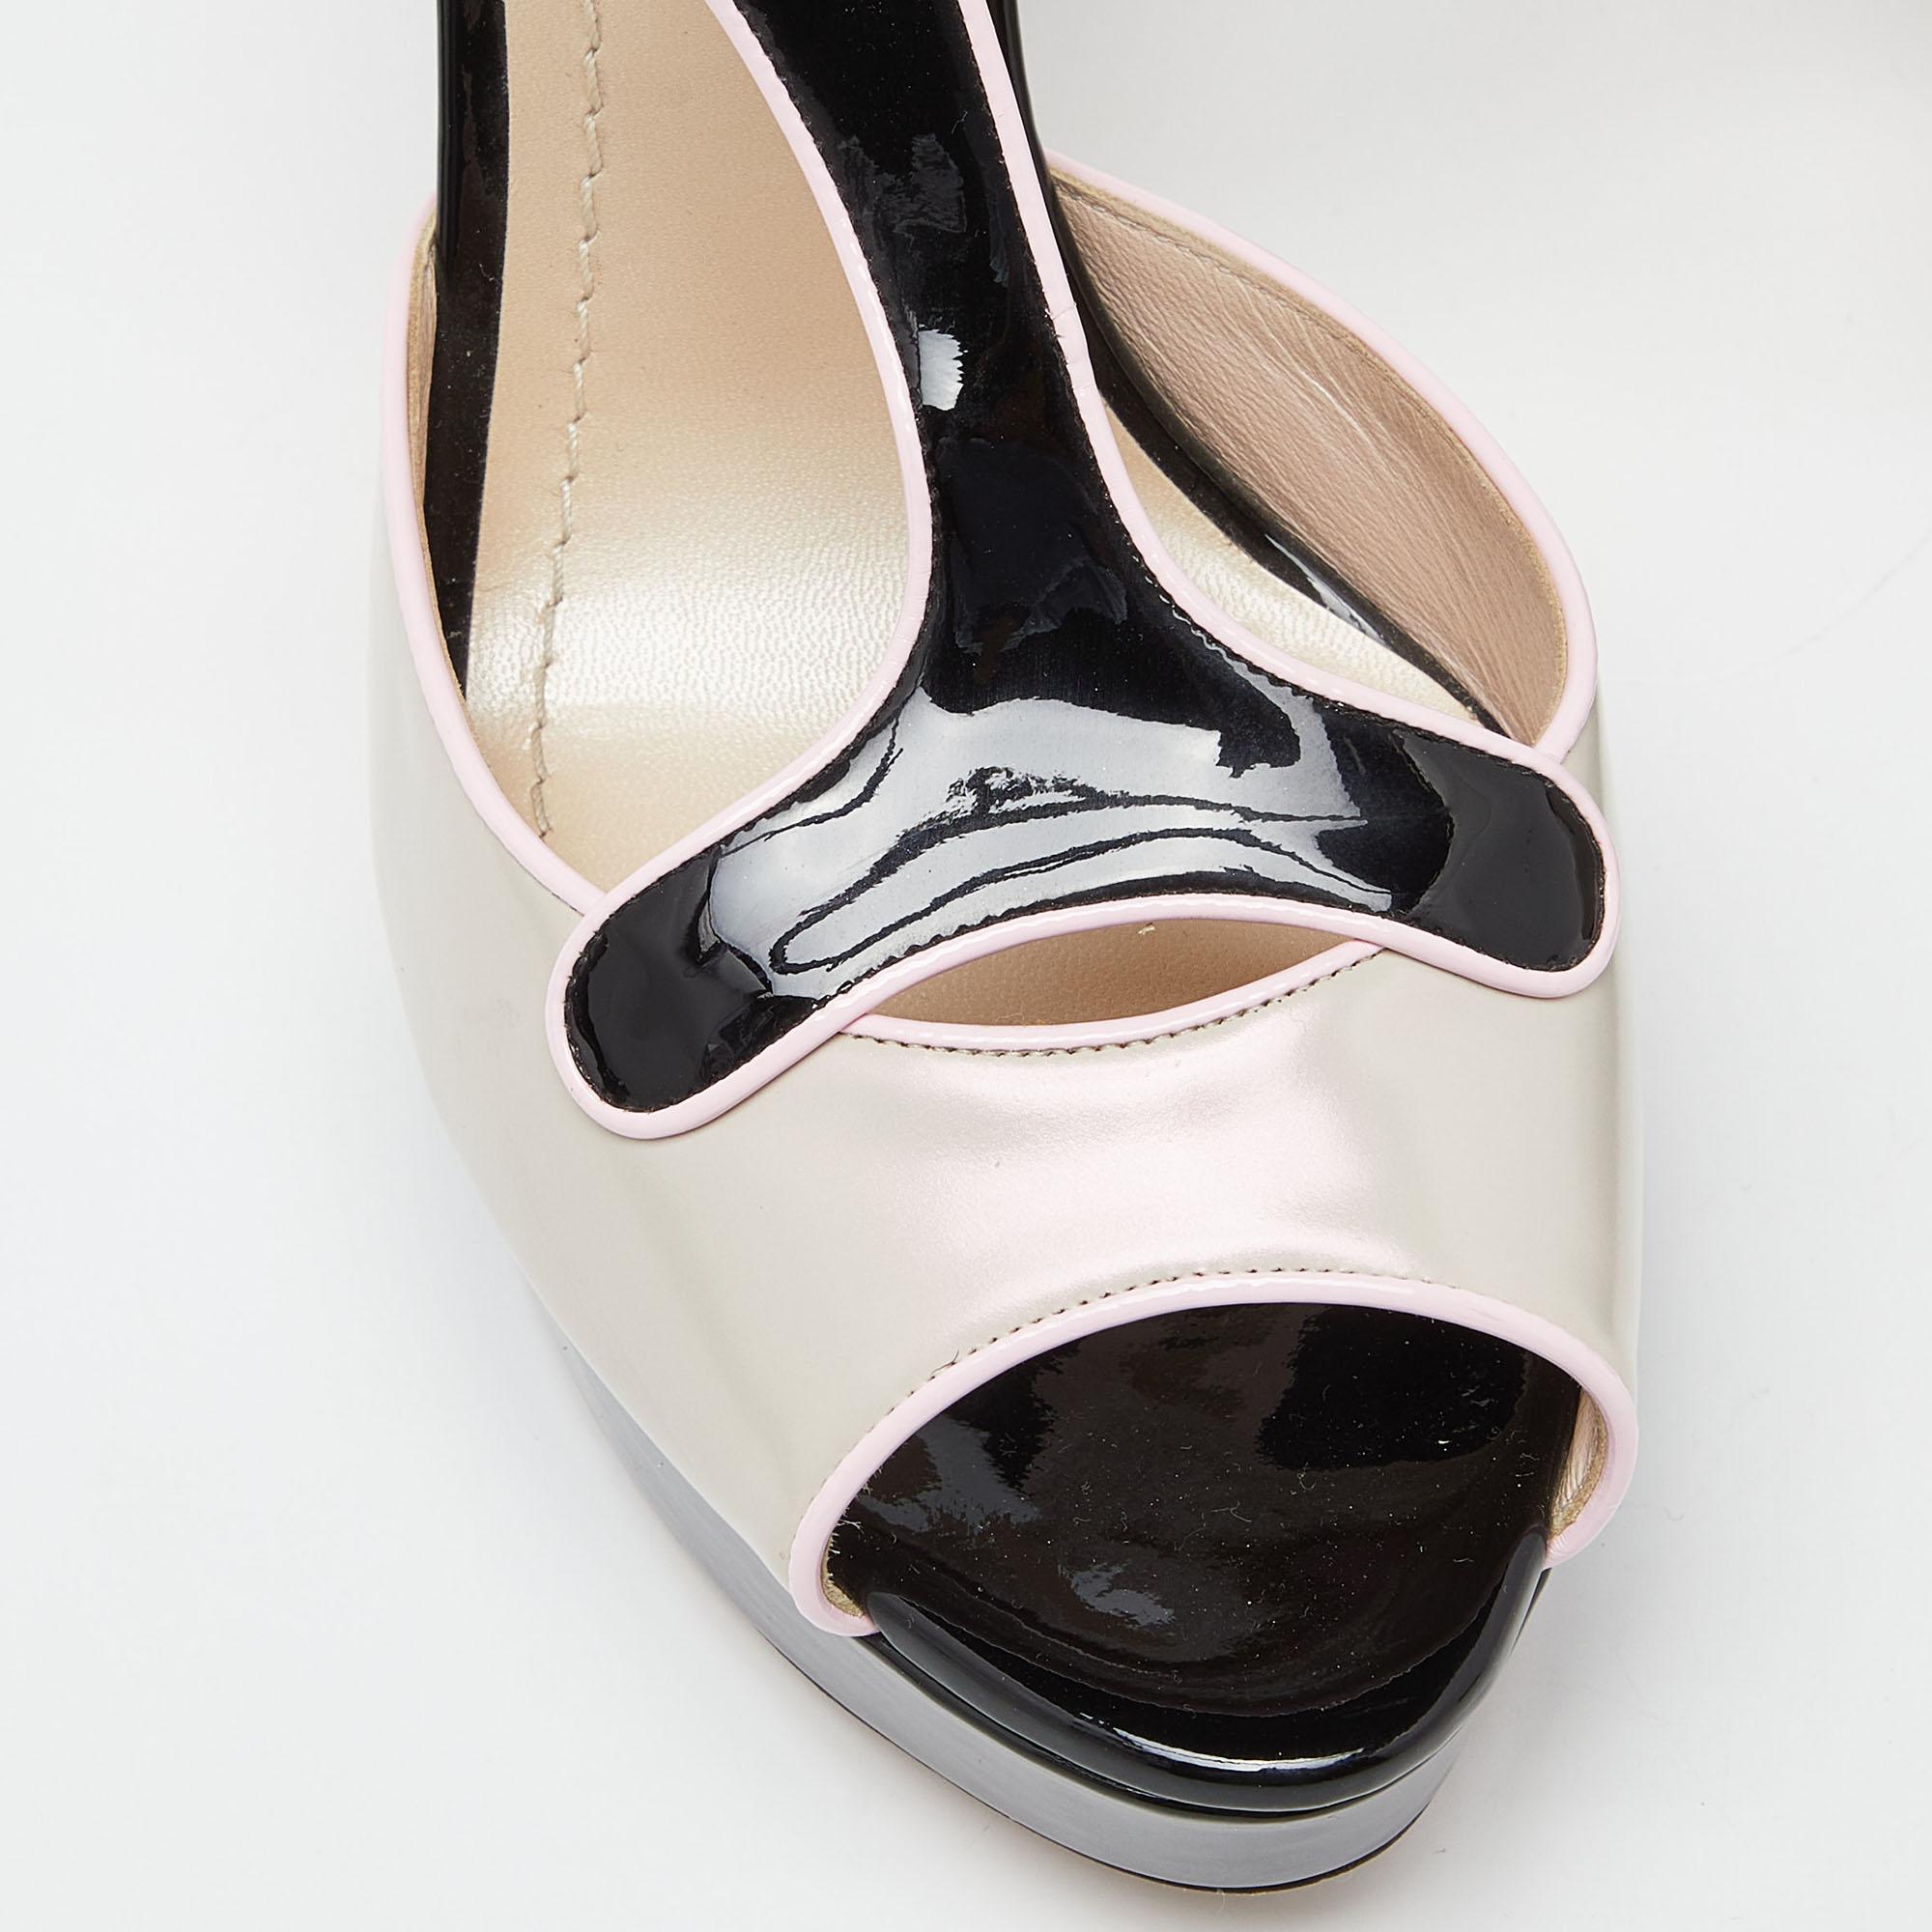 Dior Tri Color Patent Leather Platform Ankle Strap Sandals Size 37.5 1